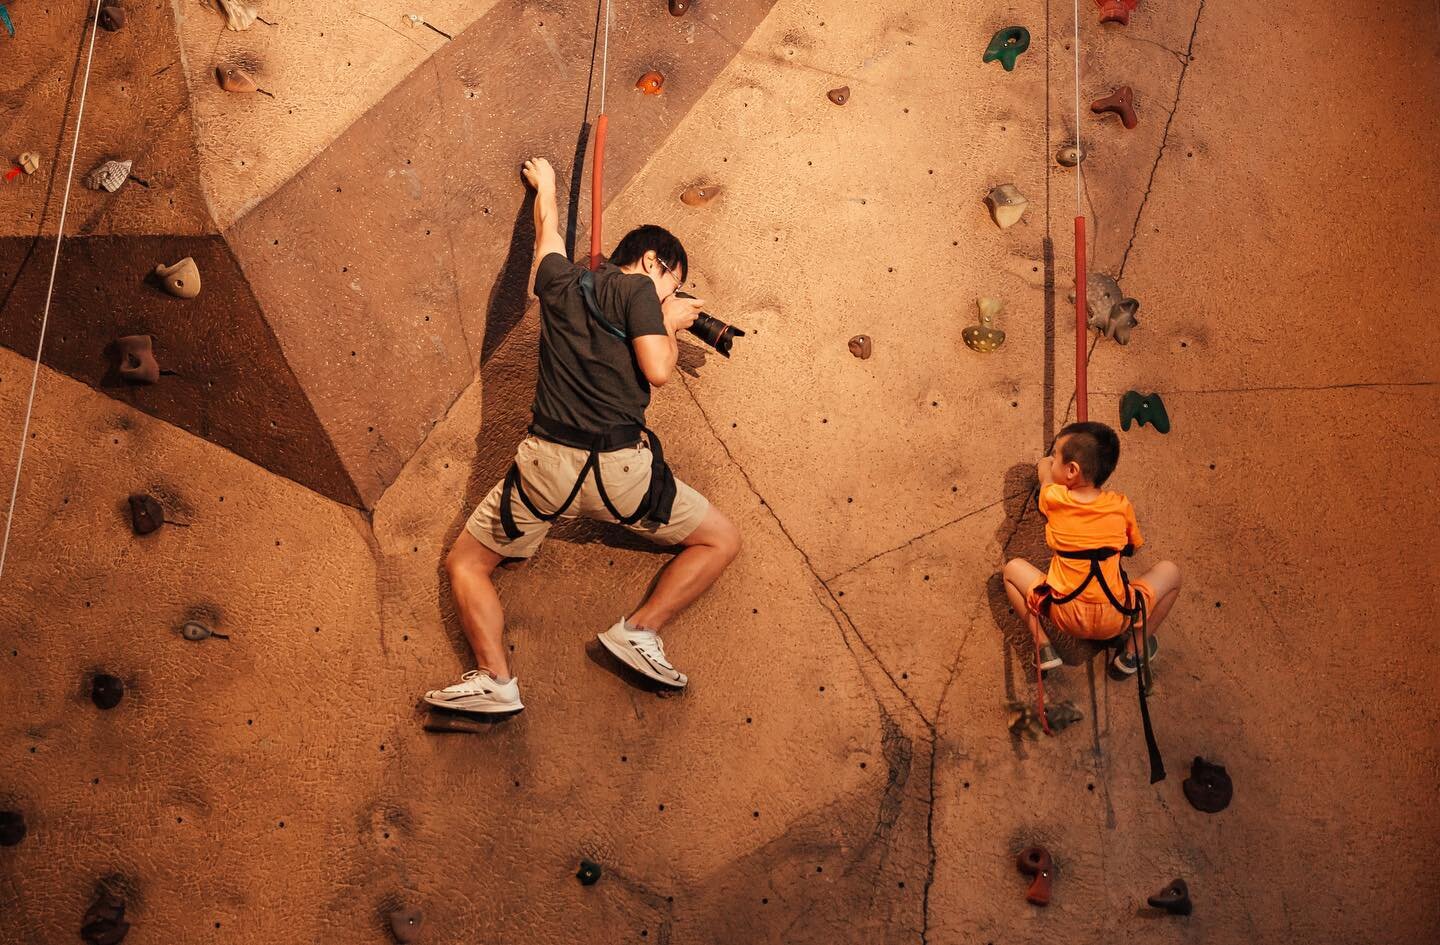 How a photographer dad shoot for his son&rsquo;s rock climbing moments from different angles 🧗&zwj;♀️💫📸 

#wildandbravelittles
#theartofchildhood
#childrenseemagic
#candidchildhood
#letthekids
#mom_hub
#documentyourmemories
#runwildmychild
#the_su